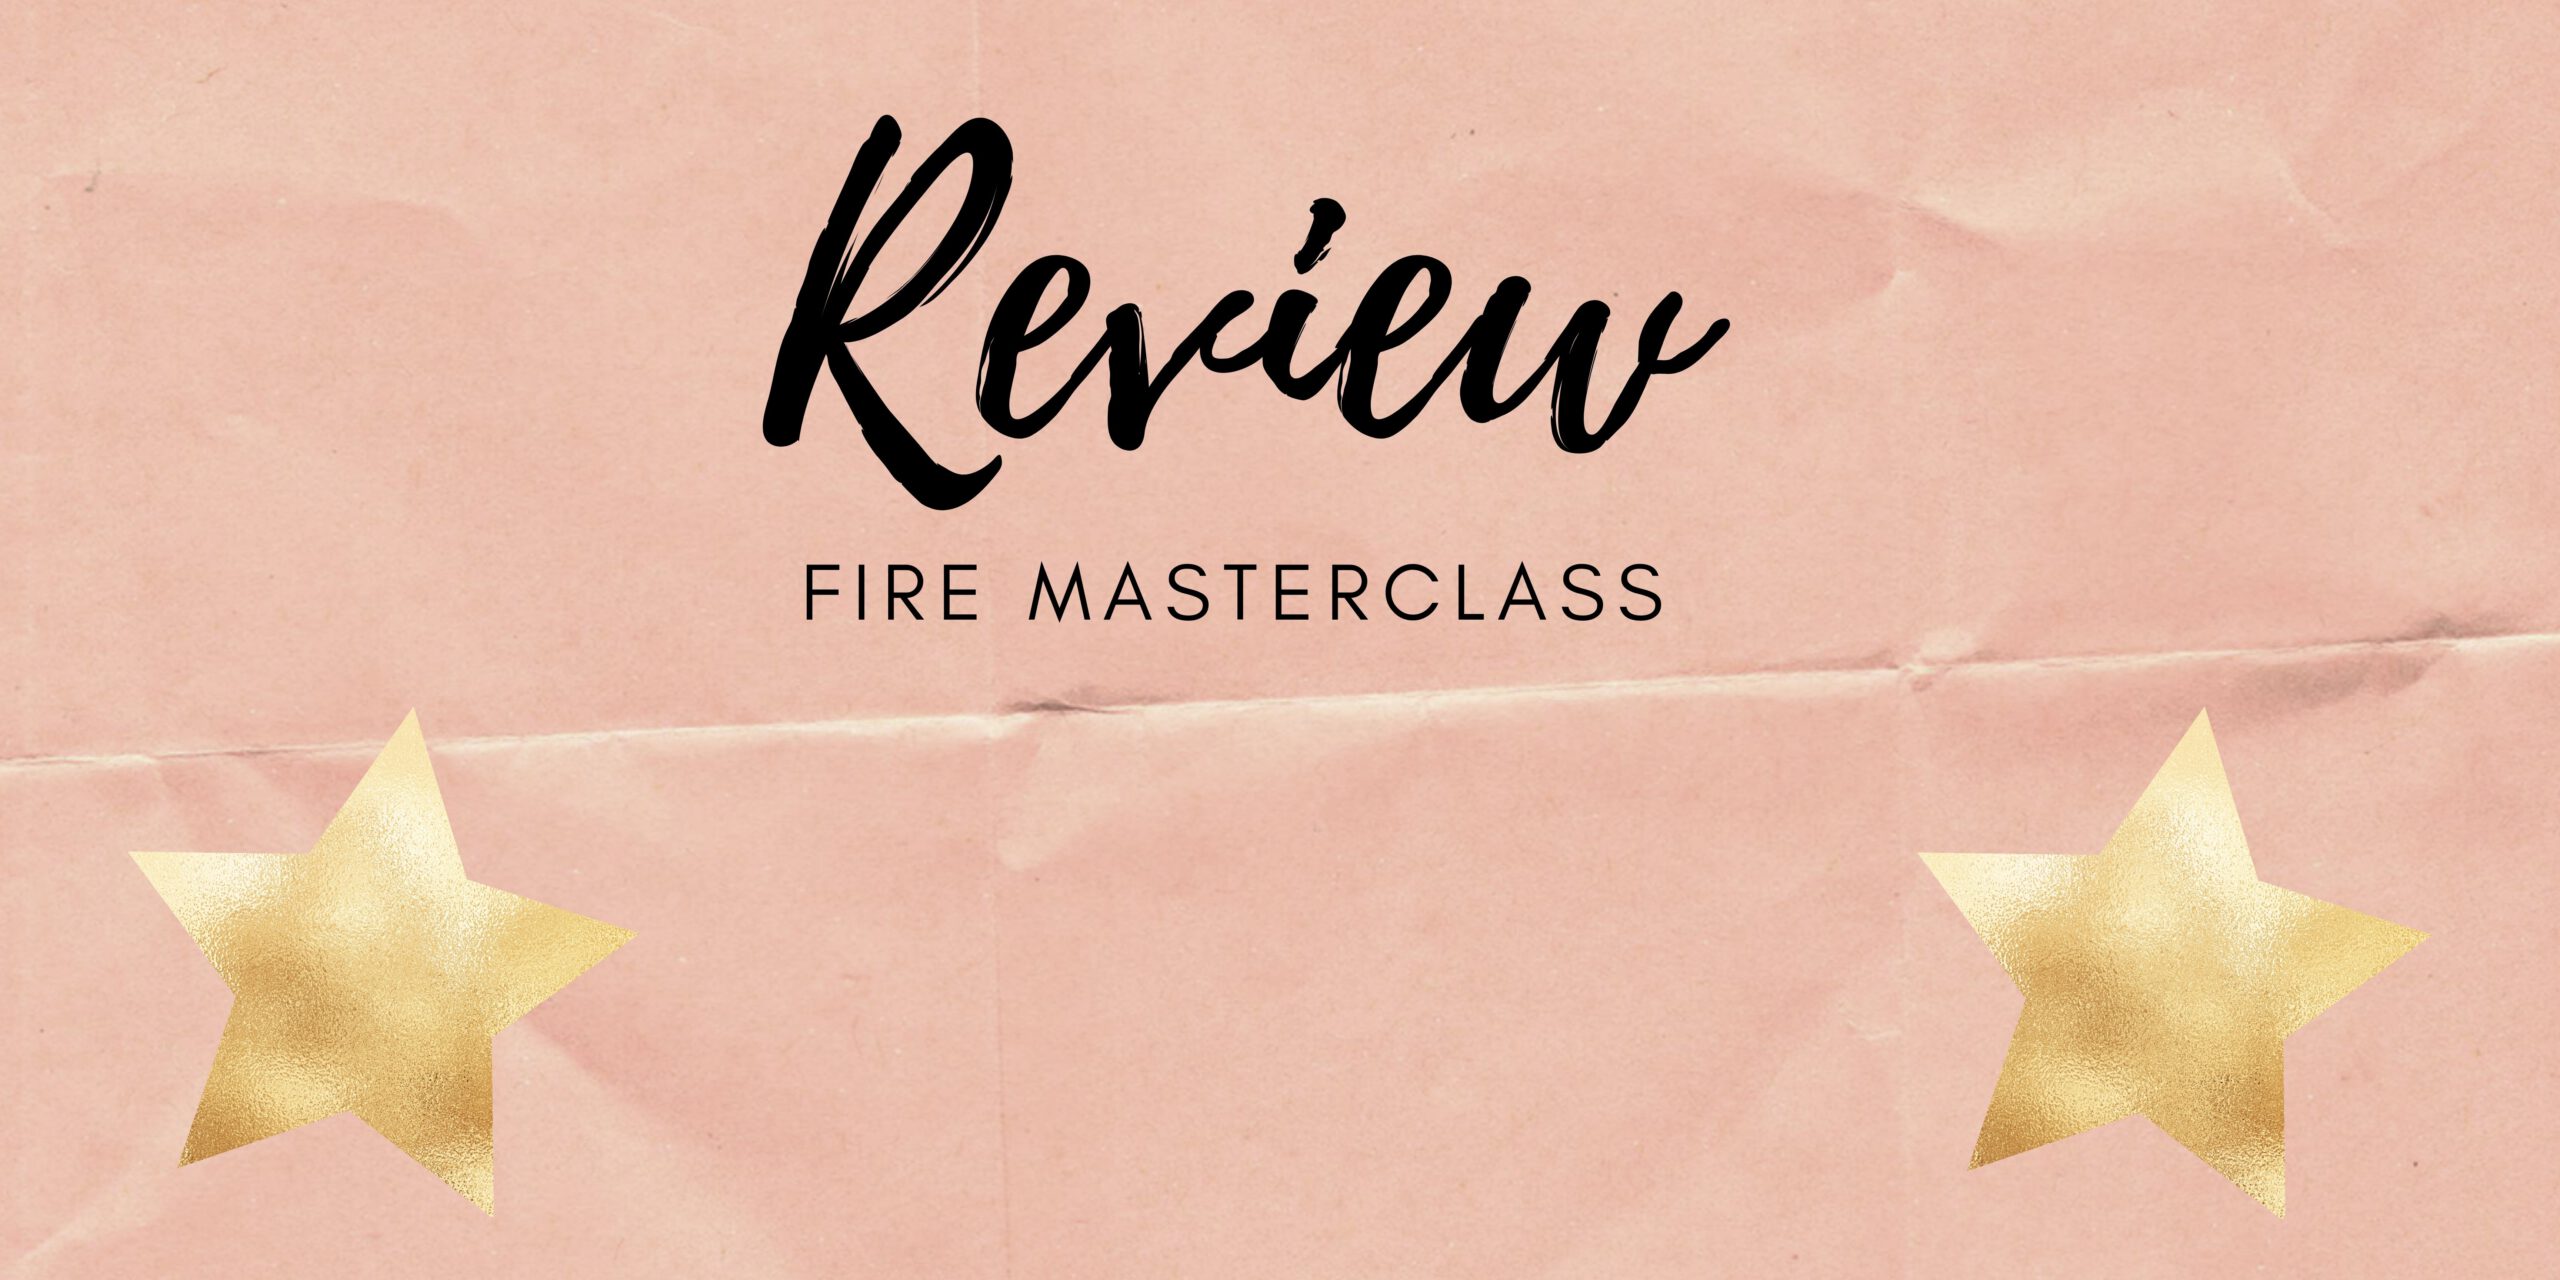 Review fire masterclass